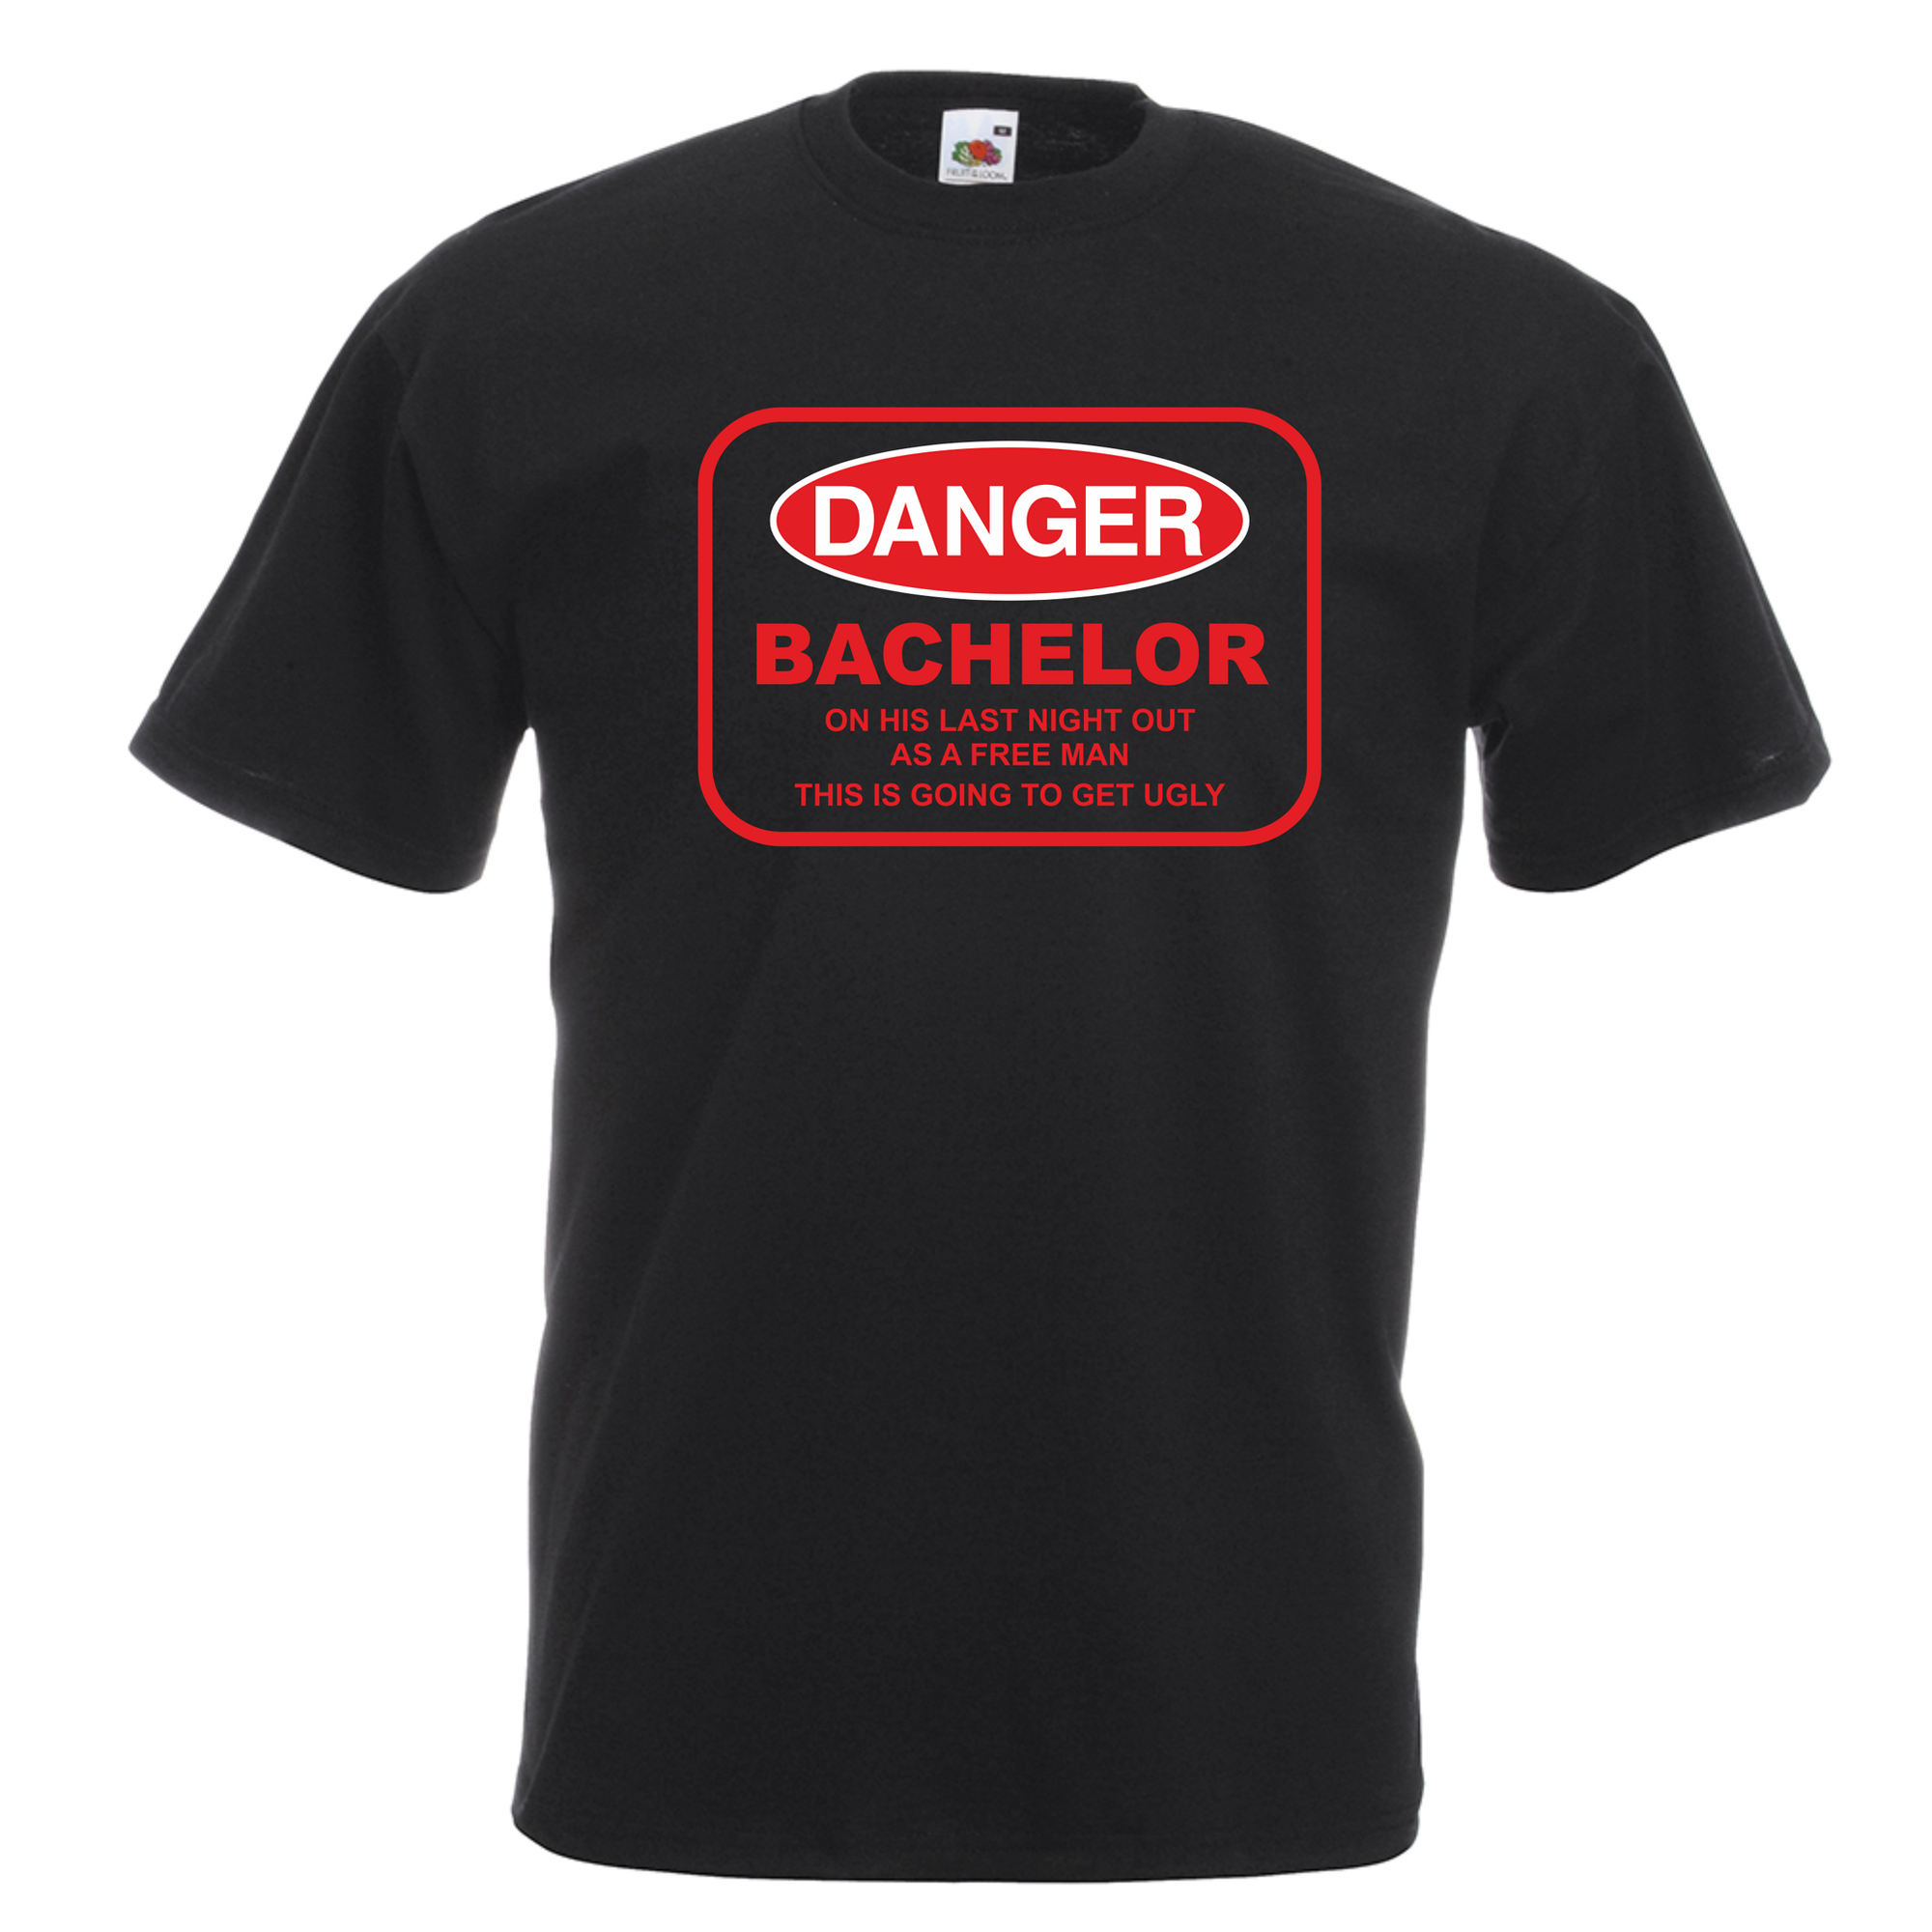 Danger Bachelor T-Shirt - Personalise It